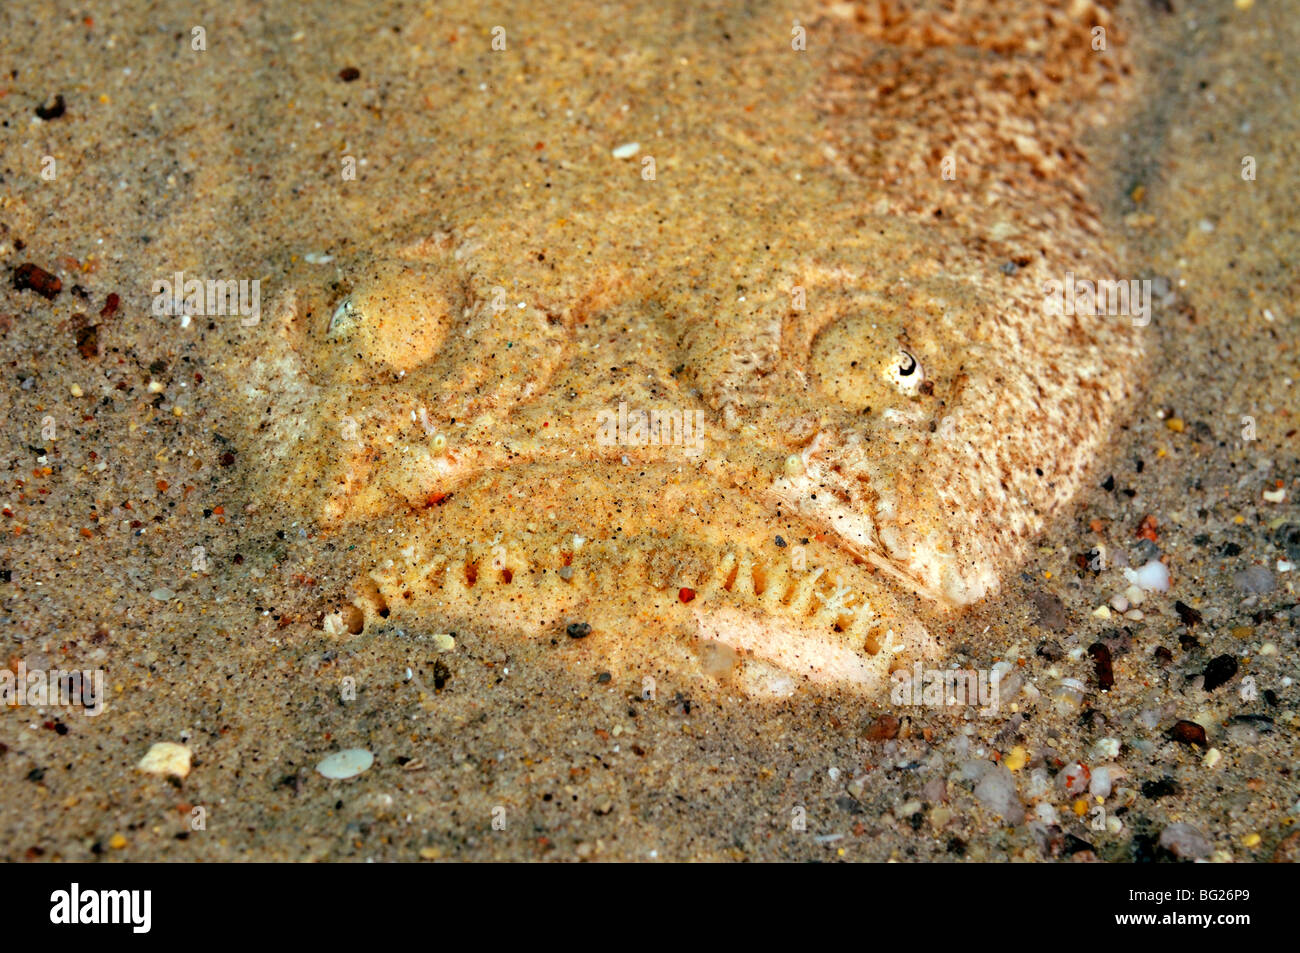 Stargazer fish, Uranoscopus sulphureus, buried in sand, 'Red Sea' Stock Photo